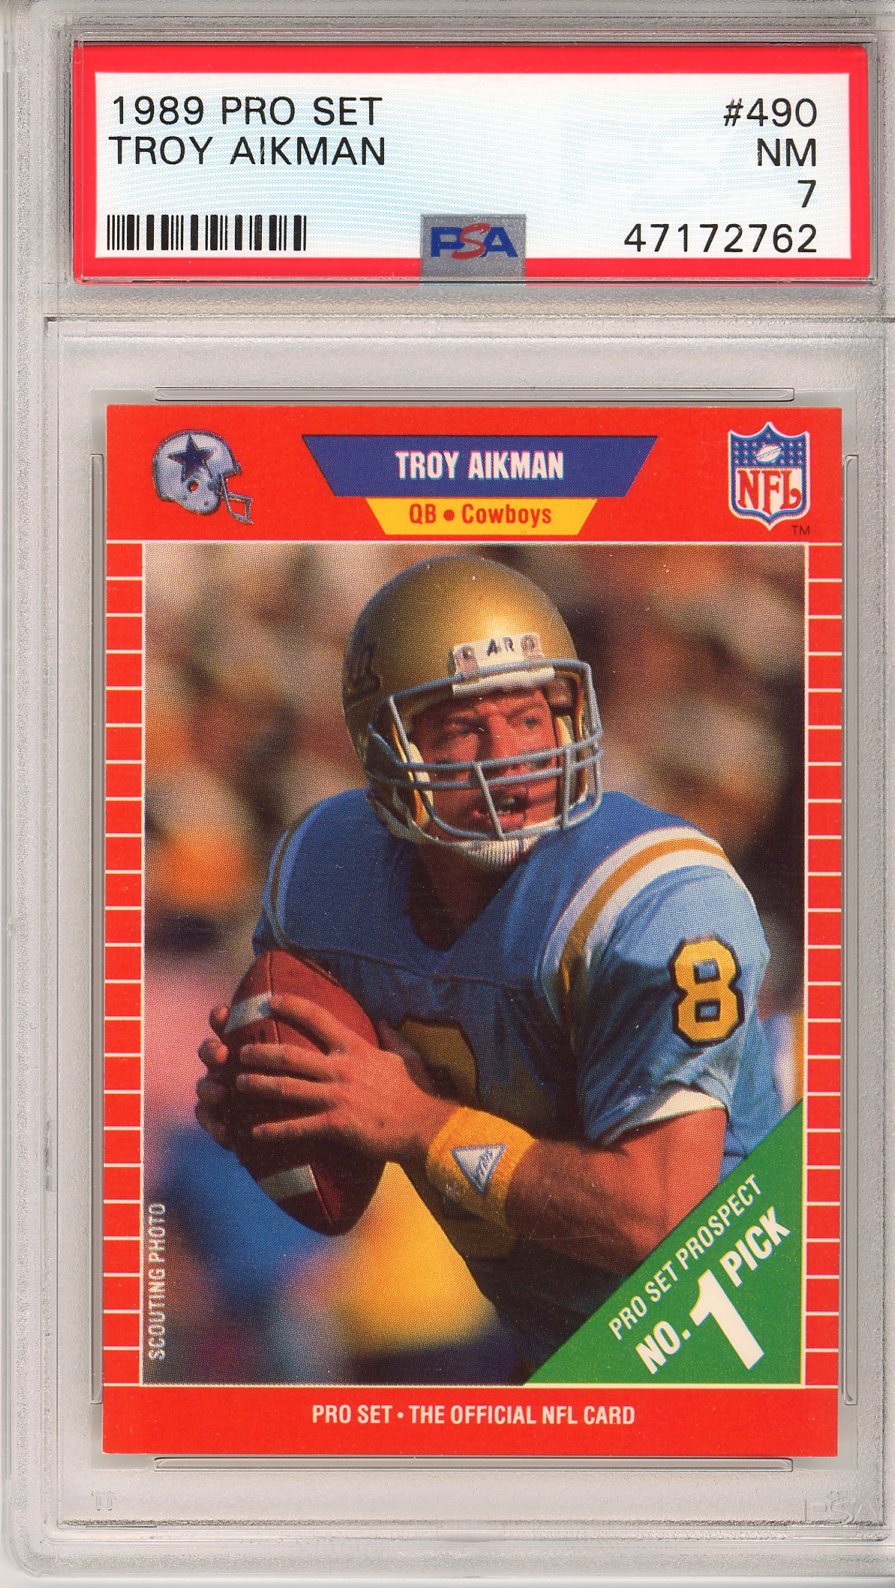 1989 Pro Set #490 Troy Aikman Rookie Card PSA 7